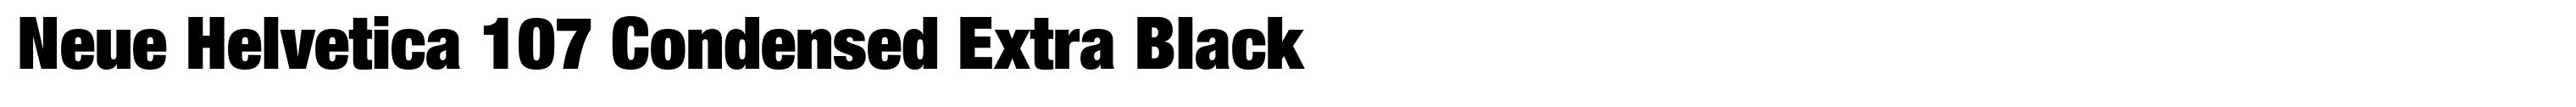 Neue Helvetica 107 Condensed Extra Black